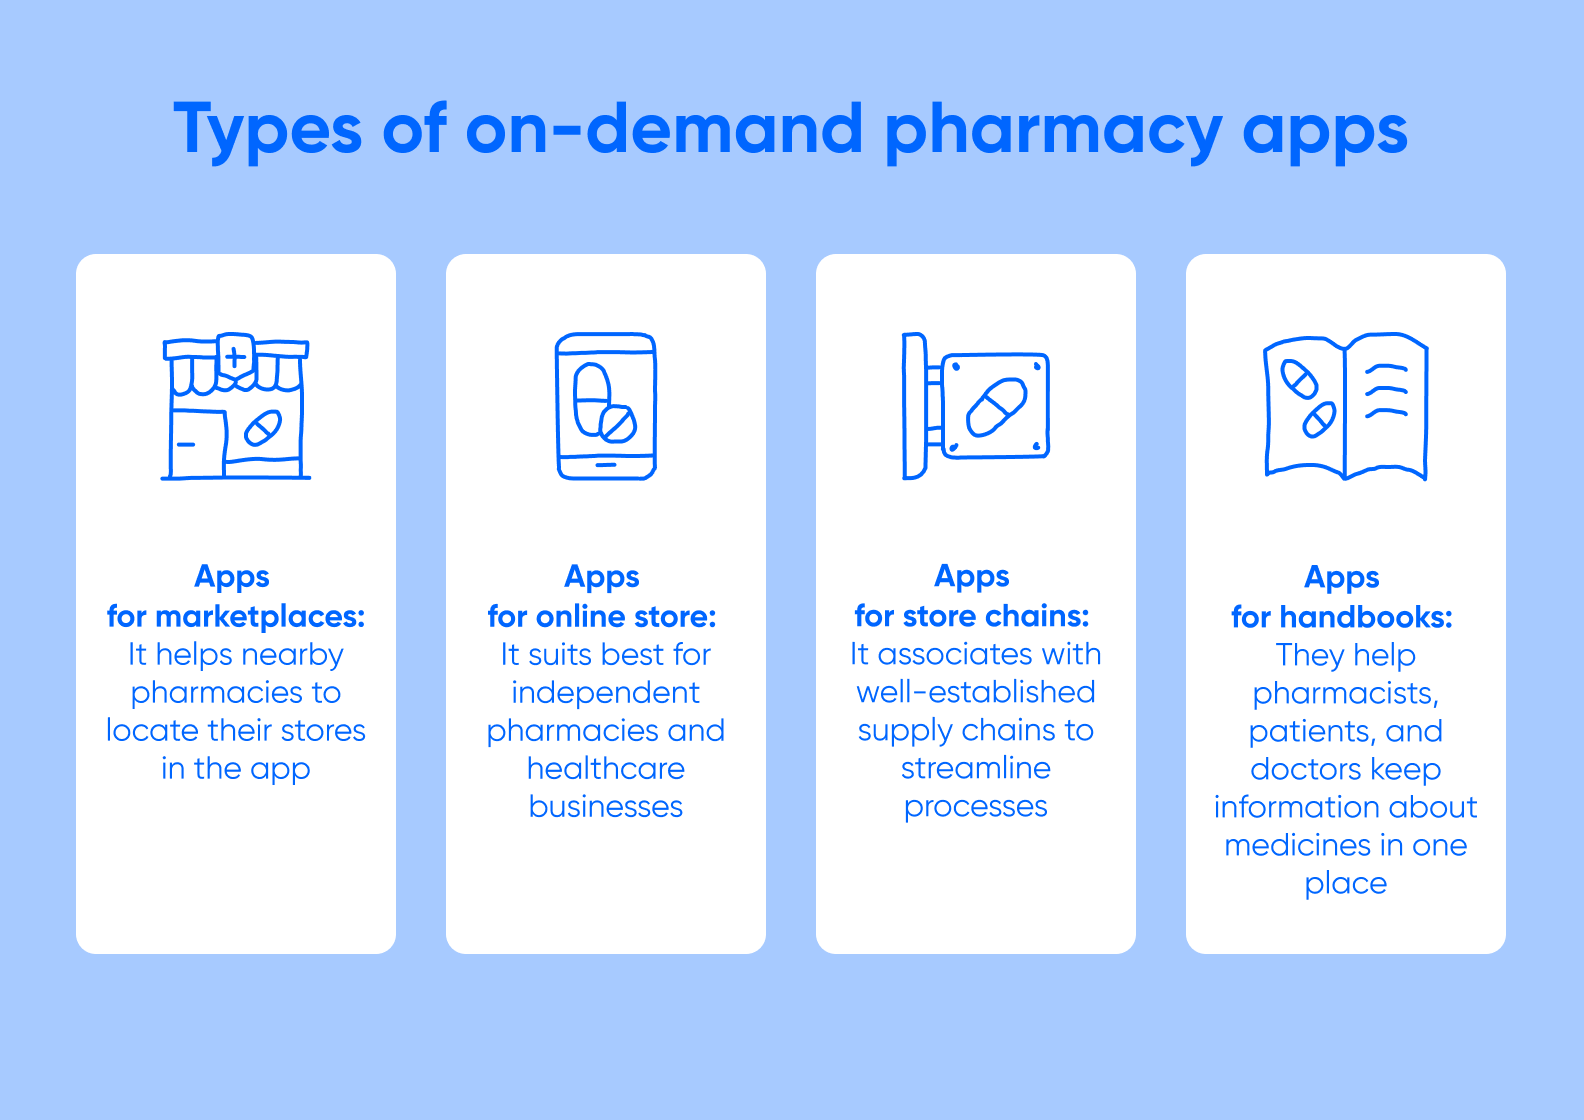 Types of pharmacy apps